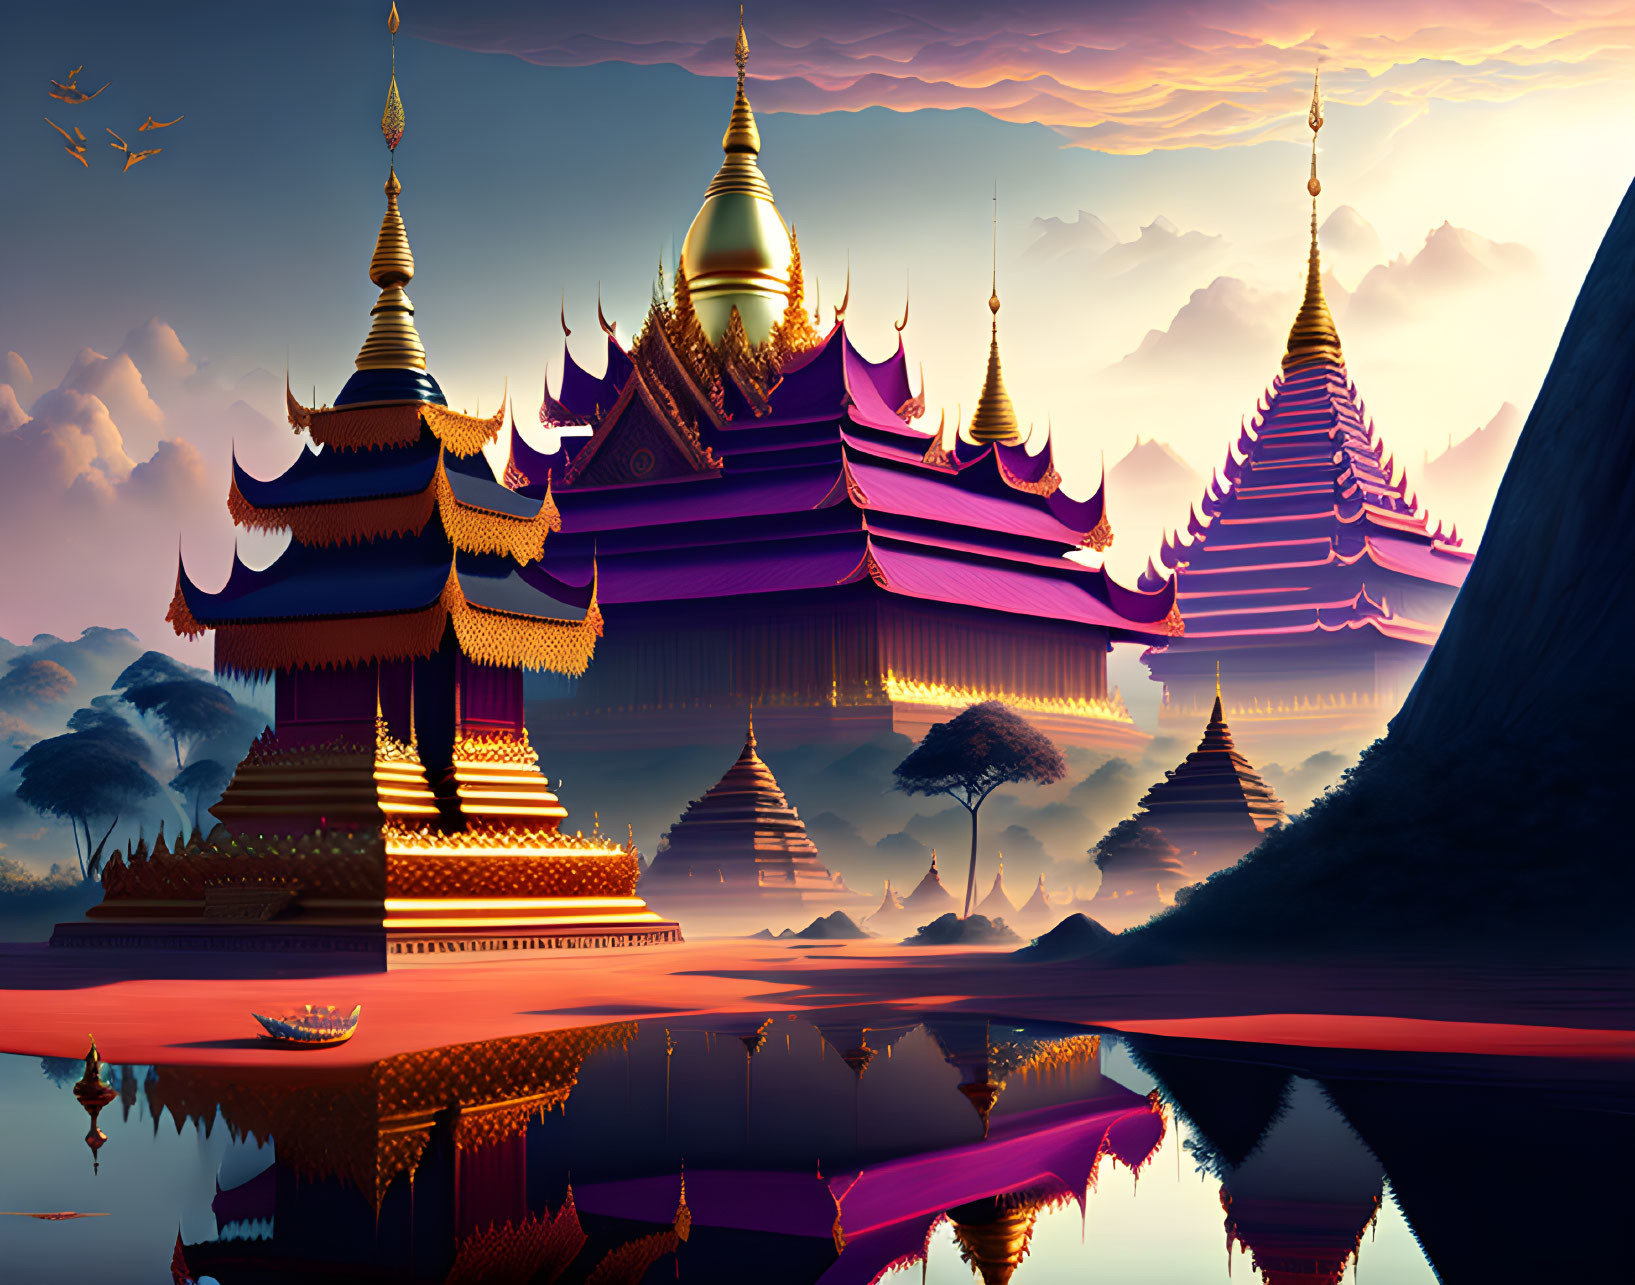 Digital artwork of Southeast Asian pagodas at sunset